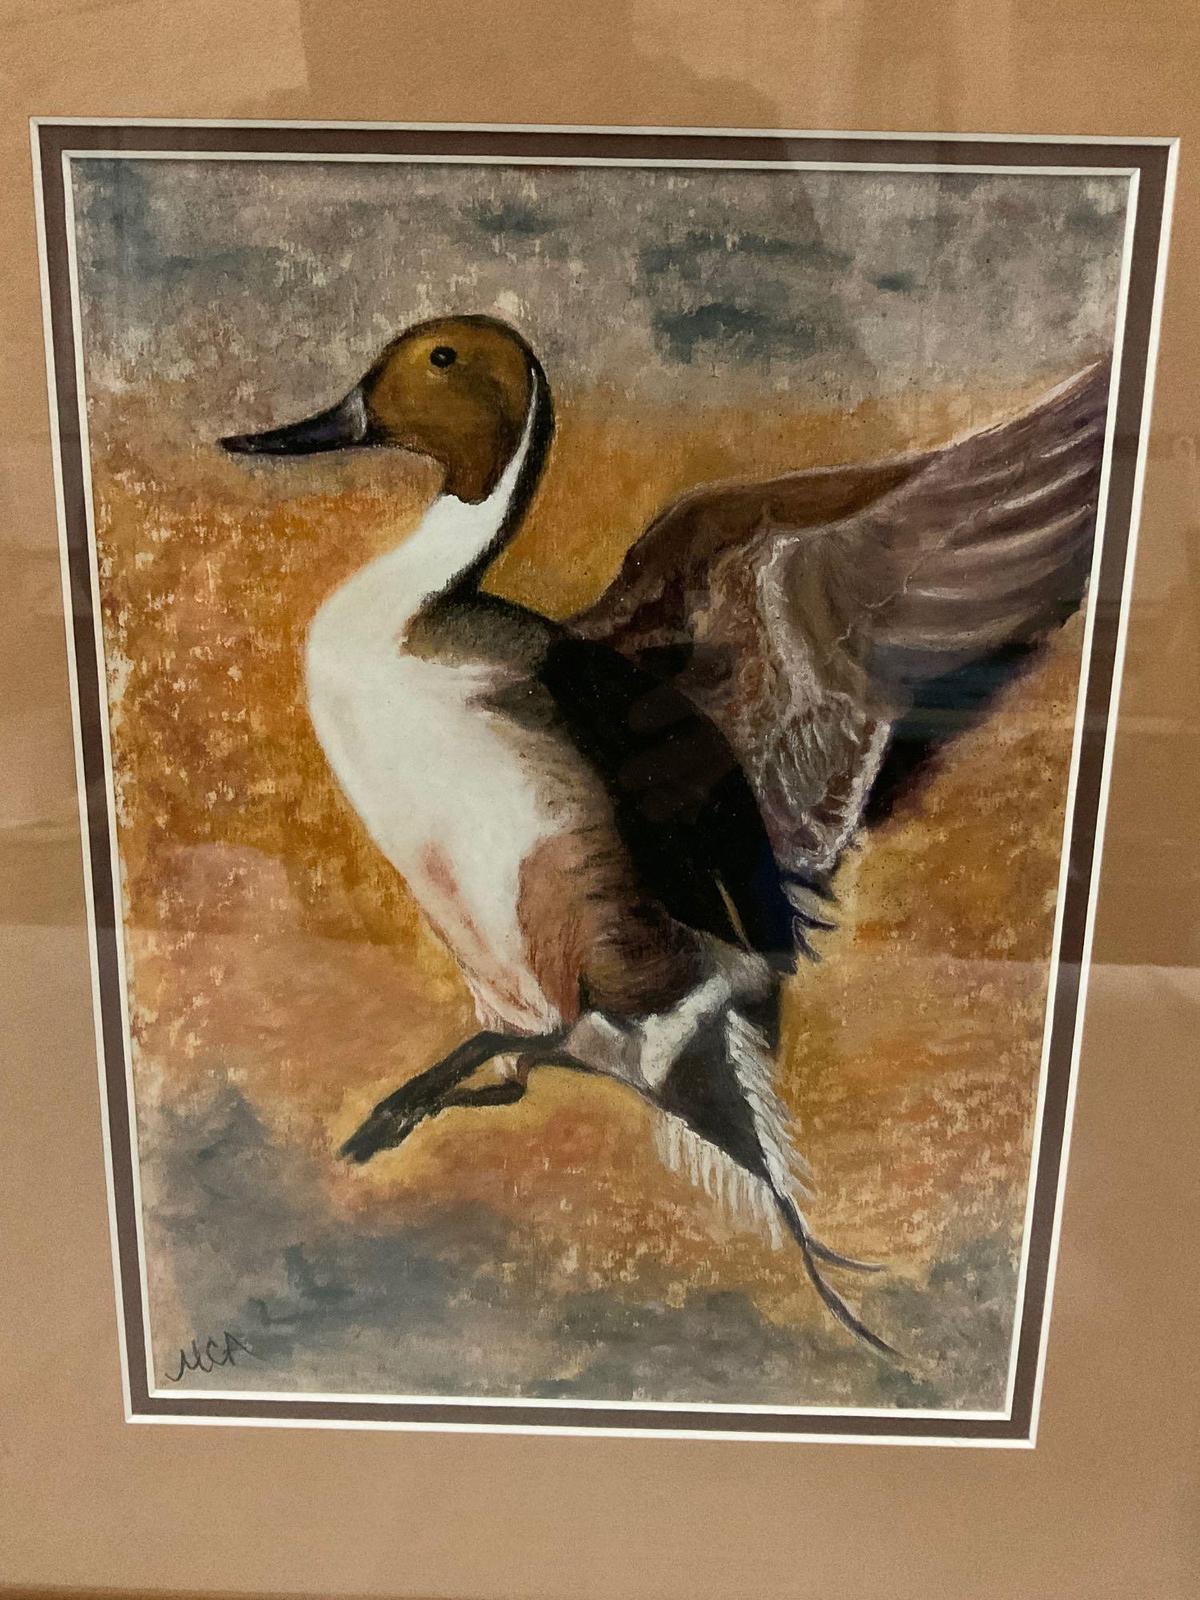 Framed Duck wildlife art print by artist MCA, approx 16 x 19 in.